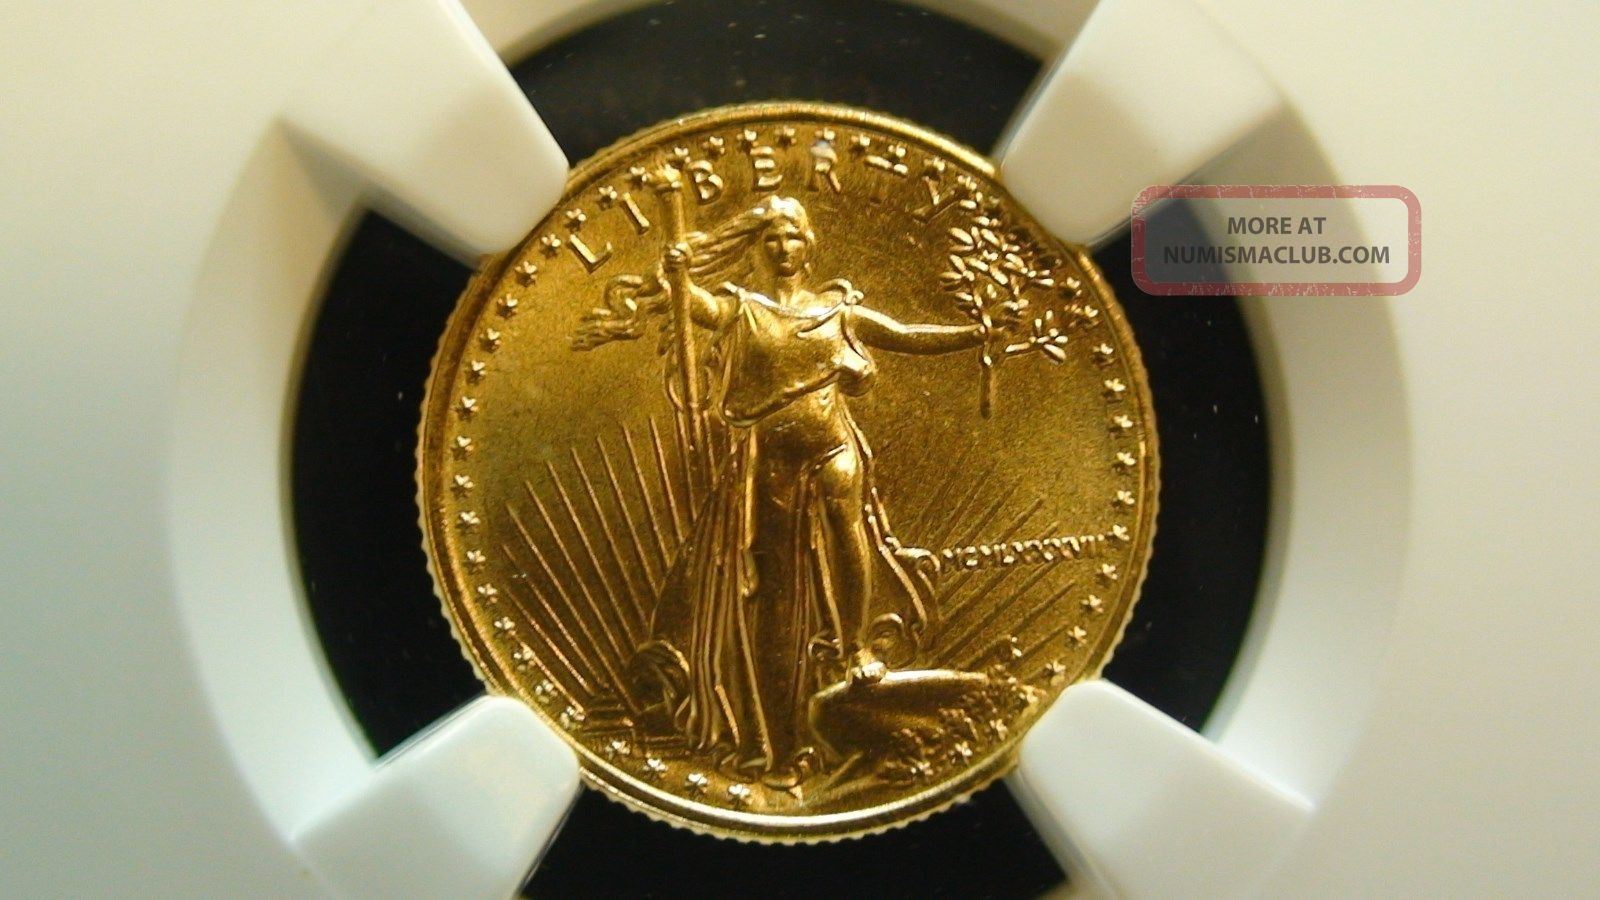 1987 $5 Gold Eagle Ngc Ms69 Tenth Ounce 1/10 Oz Fine Gold Coin Mcmlxxxvii